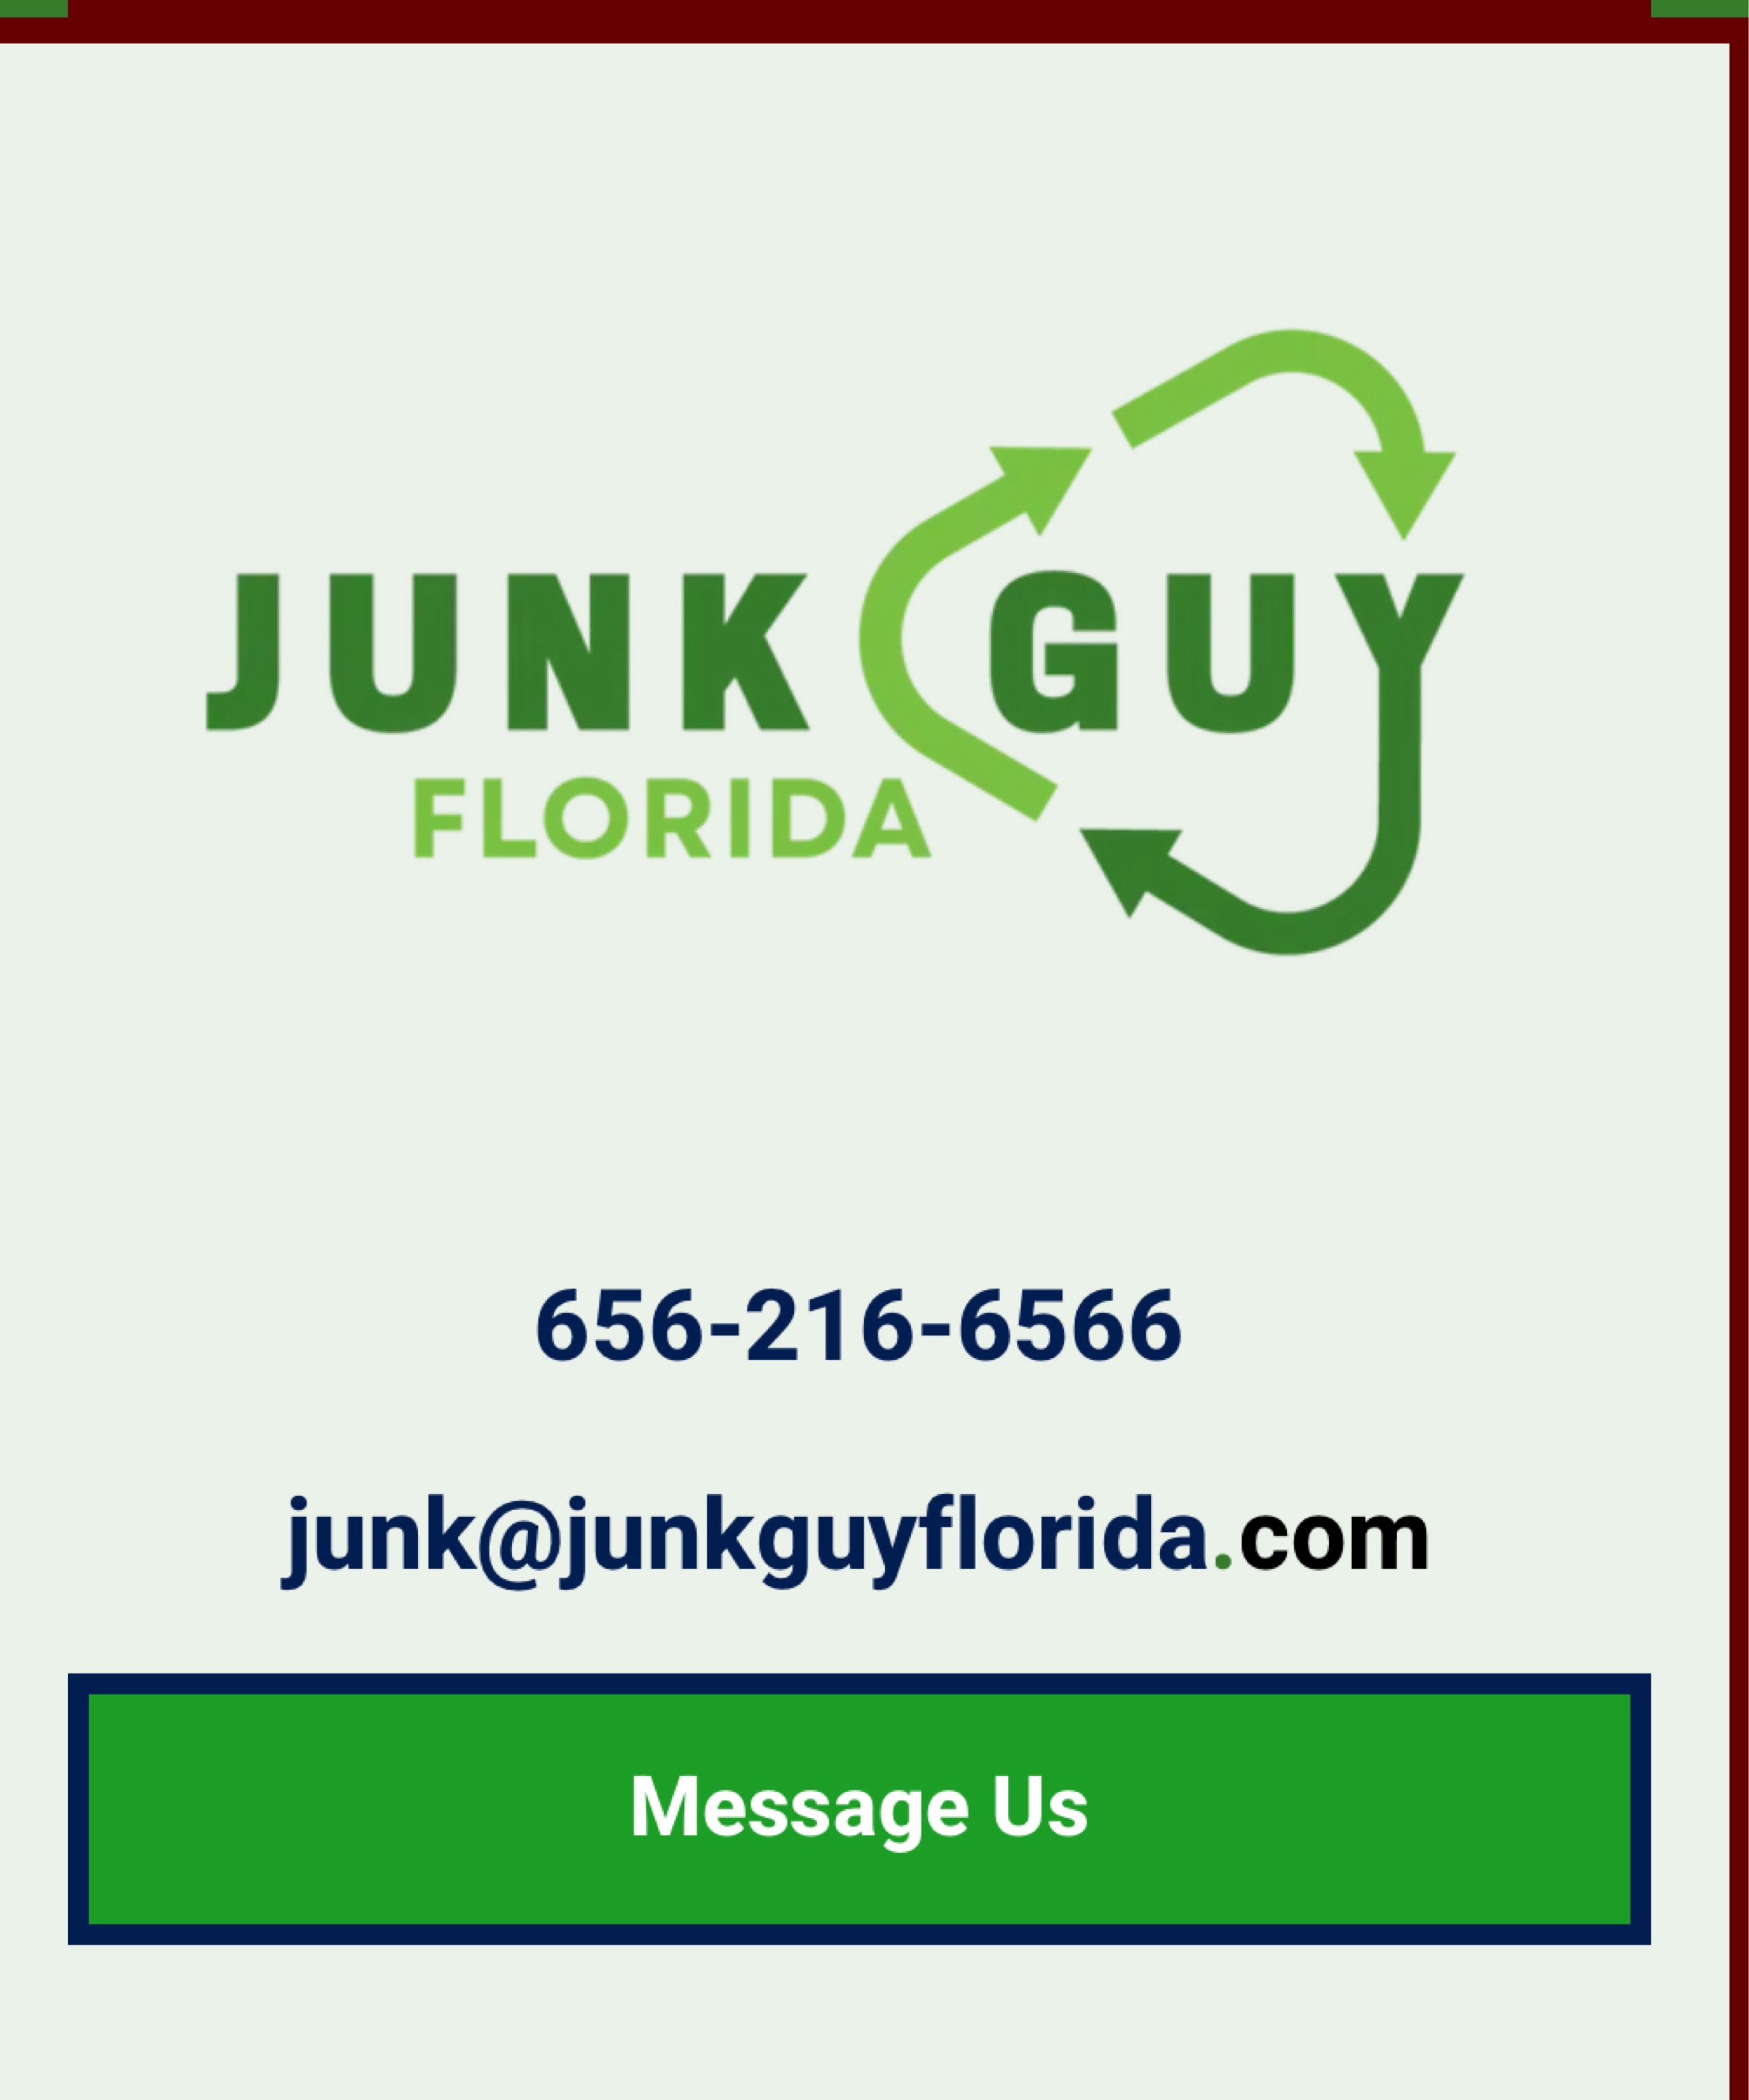 Junk Guy Florida Logo